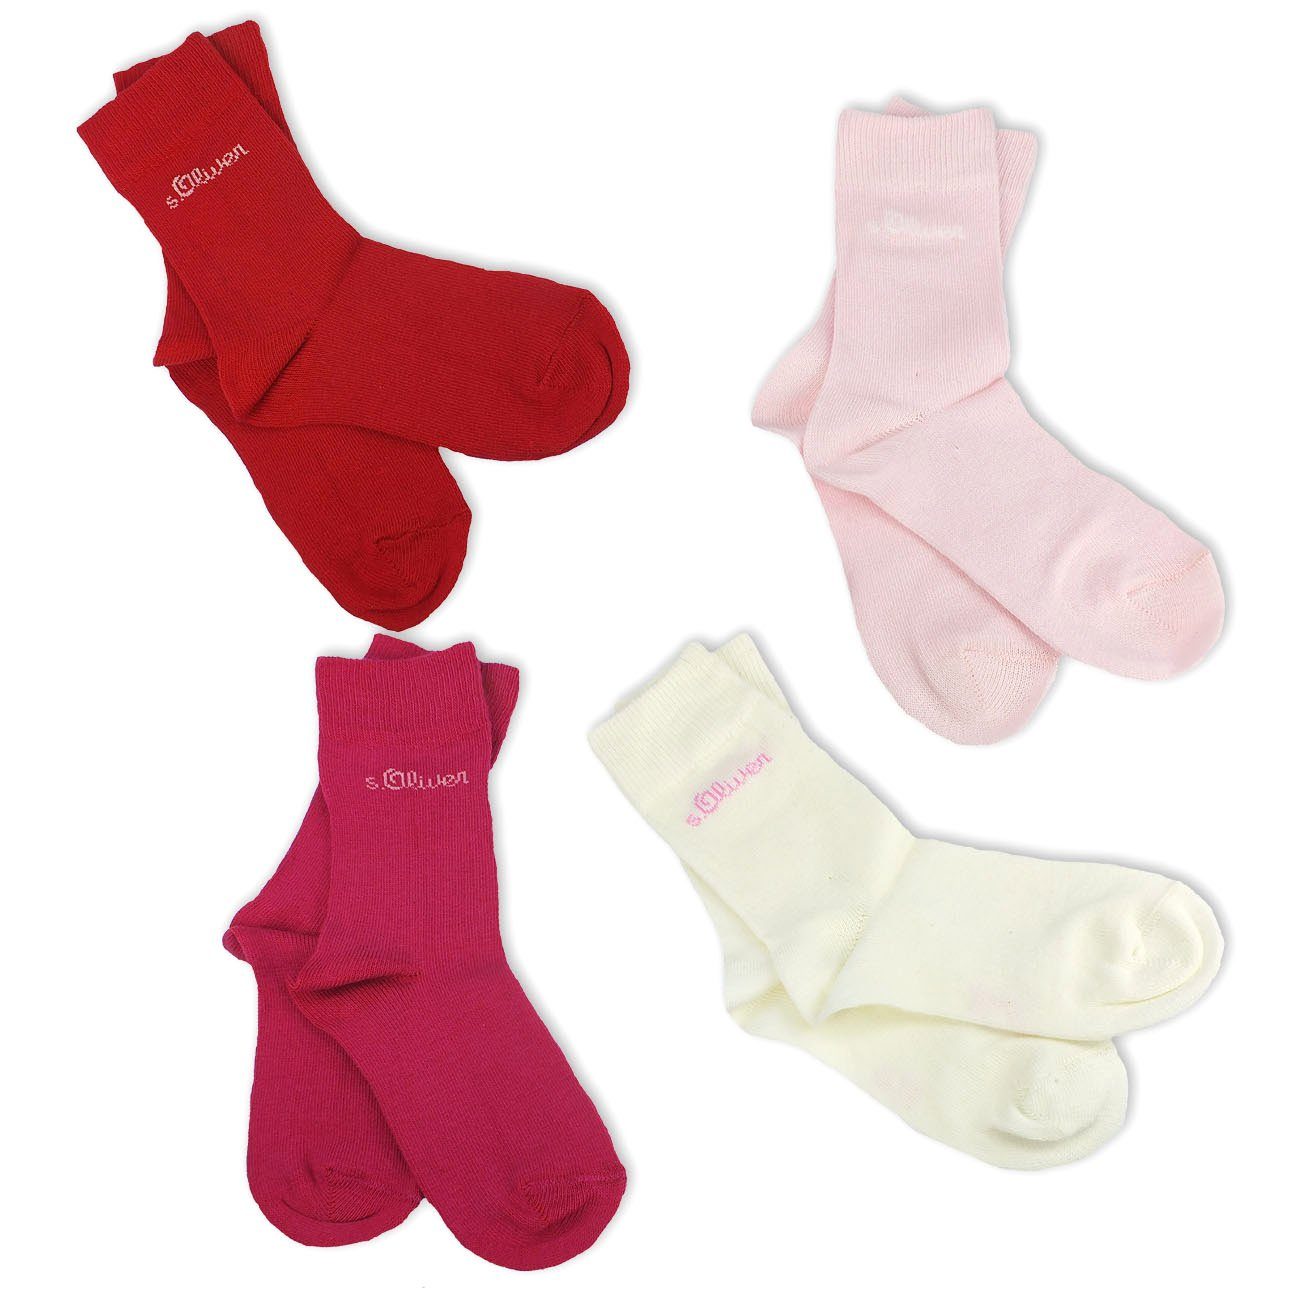 s.Oliver Langsocken S20205 (Packung, 4-Paar, 4 Paar) Kinder Socken, Jungen & Mädchen mit Baumwolle, Kindersocken 13 pink